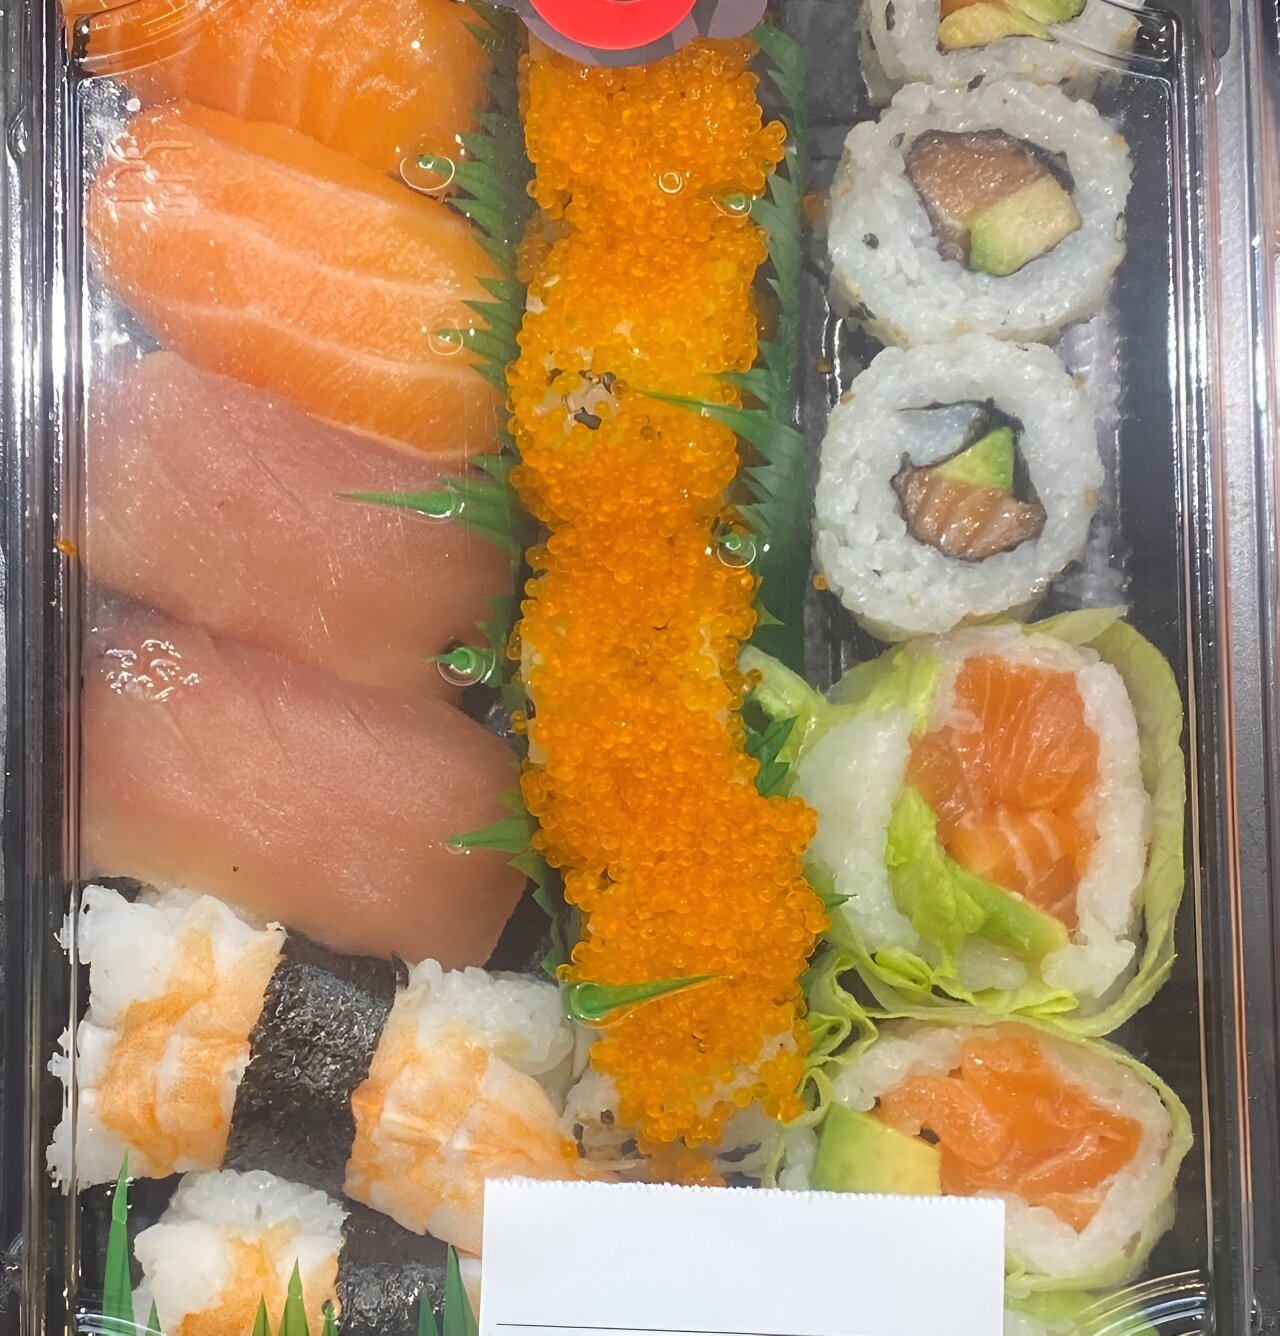 Can Sushi Make You Sick: Navigating Sushi Safety Concerns